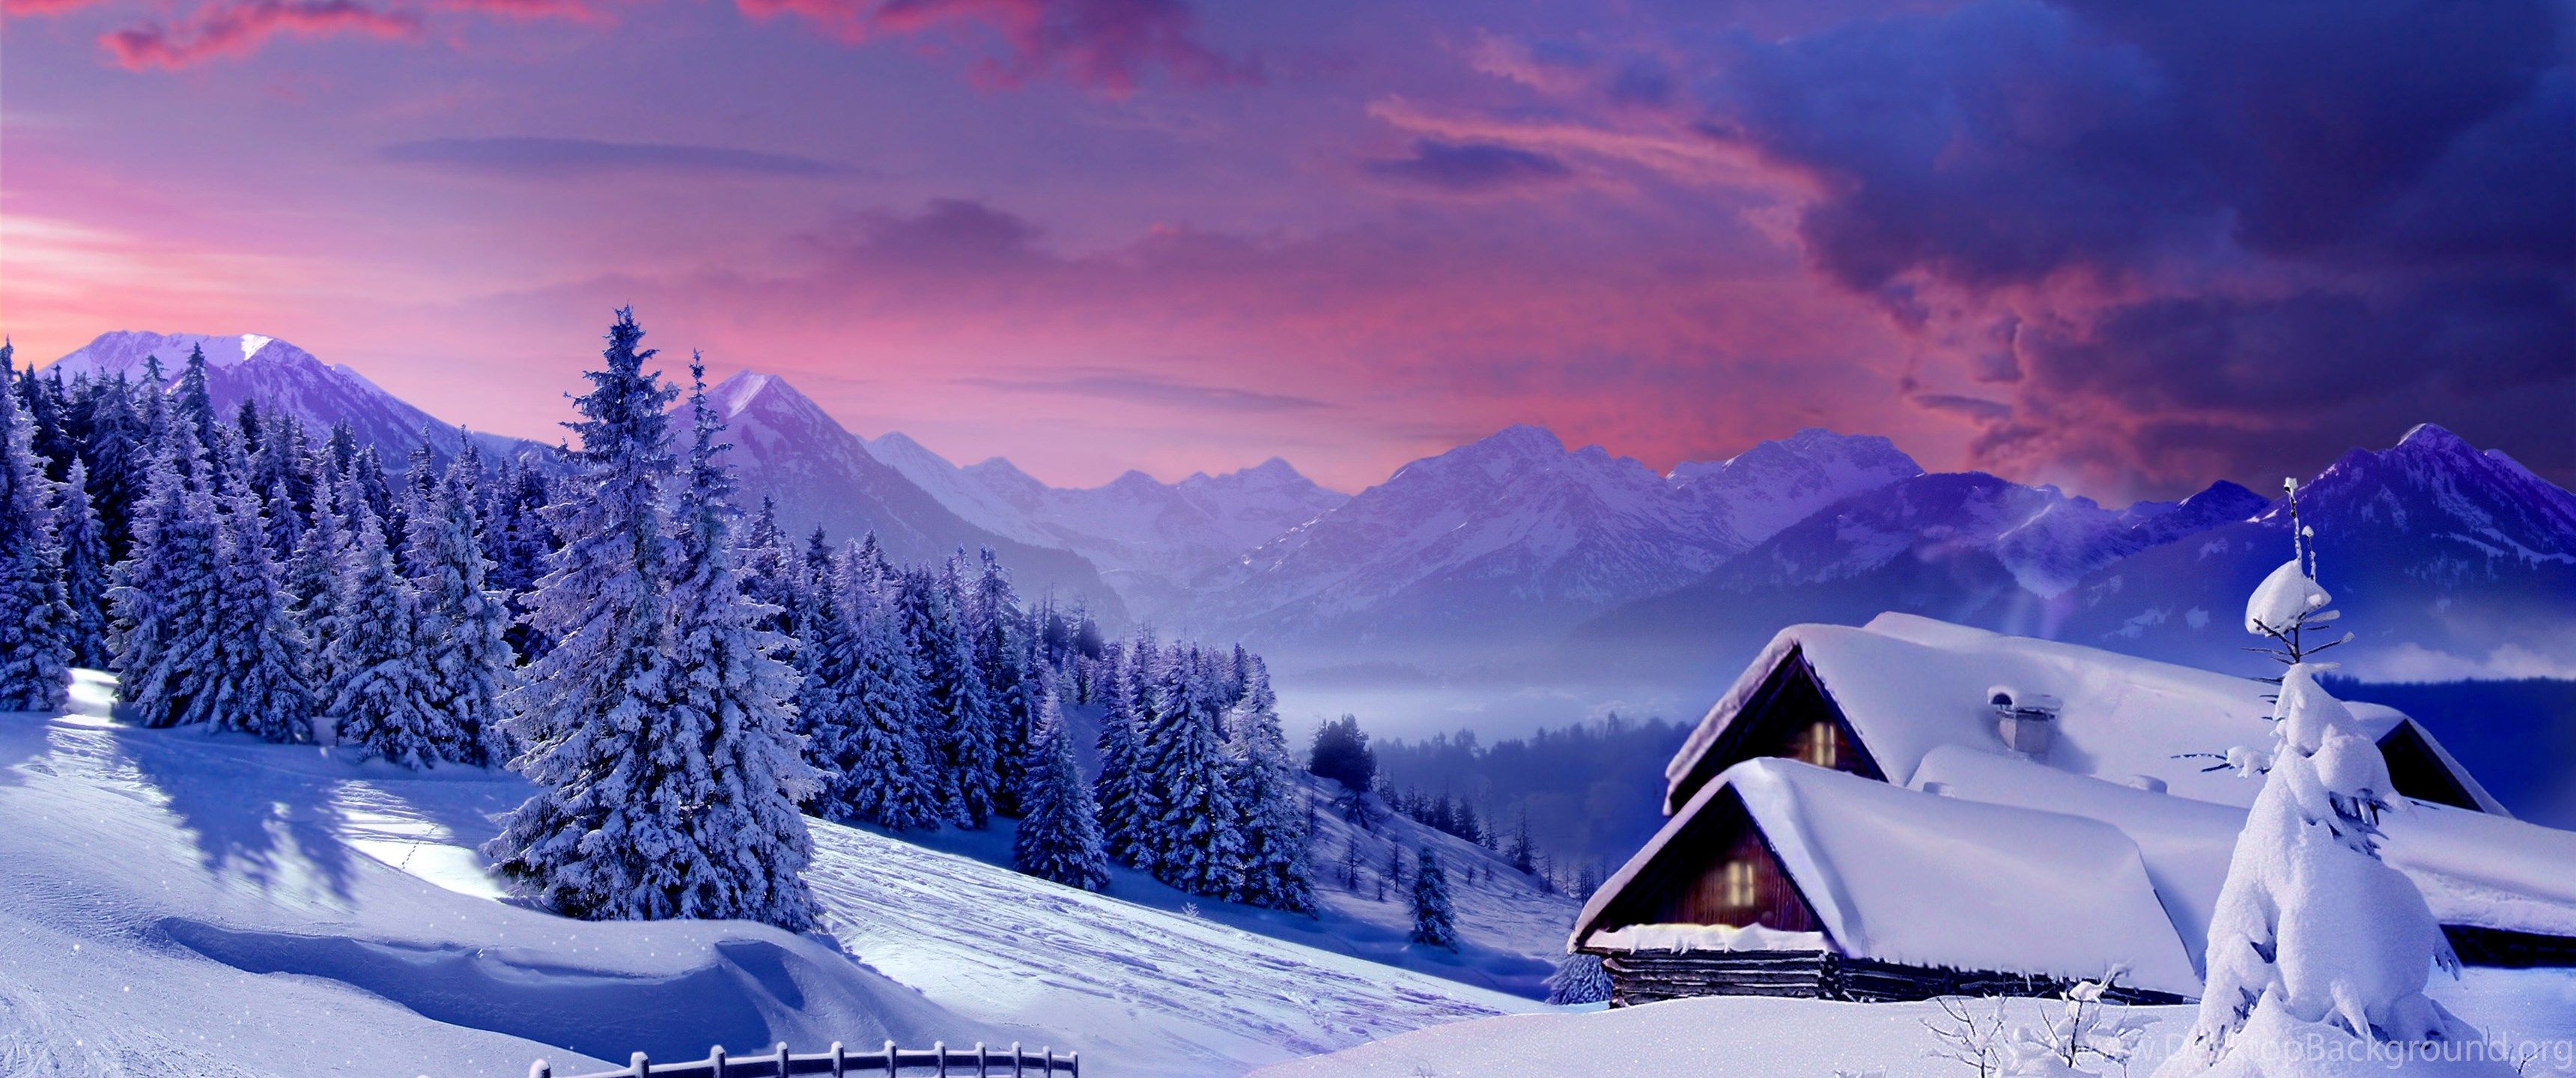 Wallpaper Sky, Snow, Winter, Clouds, Spruce, Snowy Winter. Desktop Background